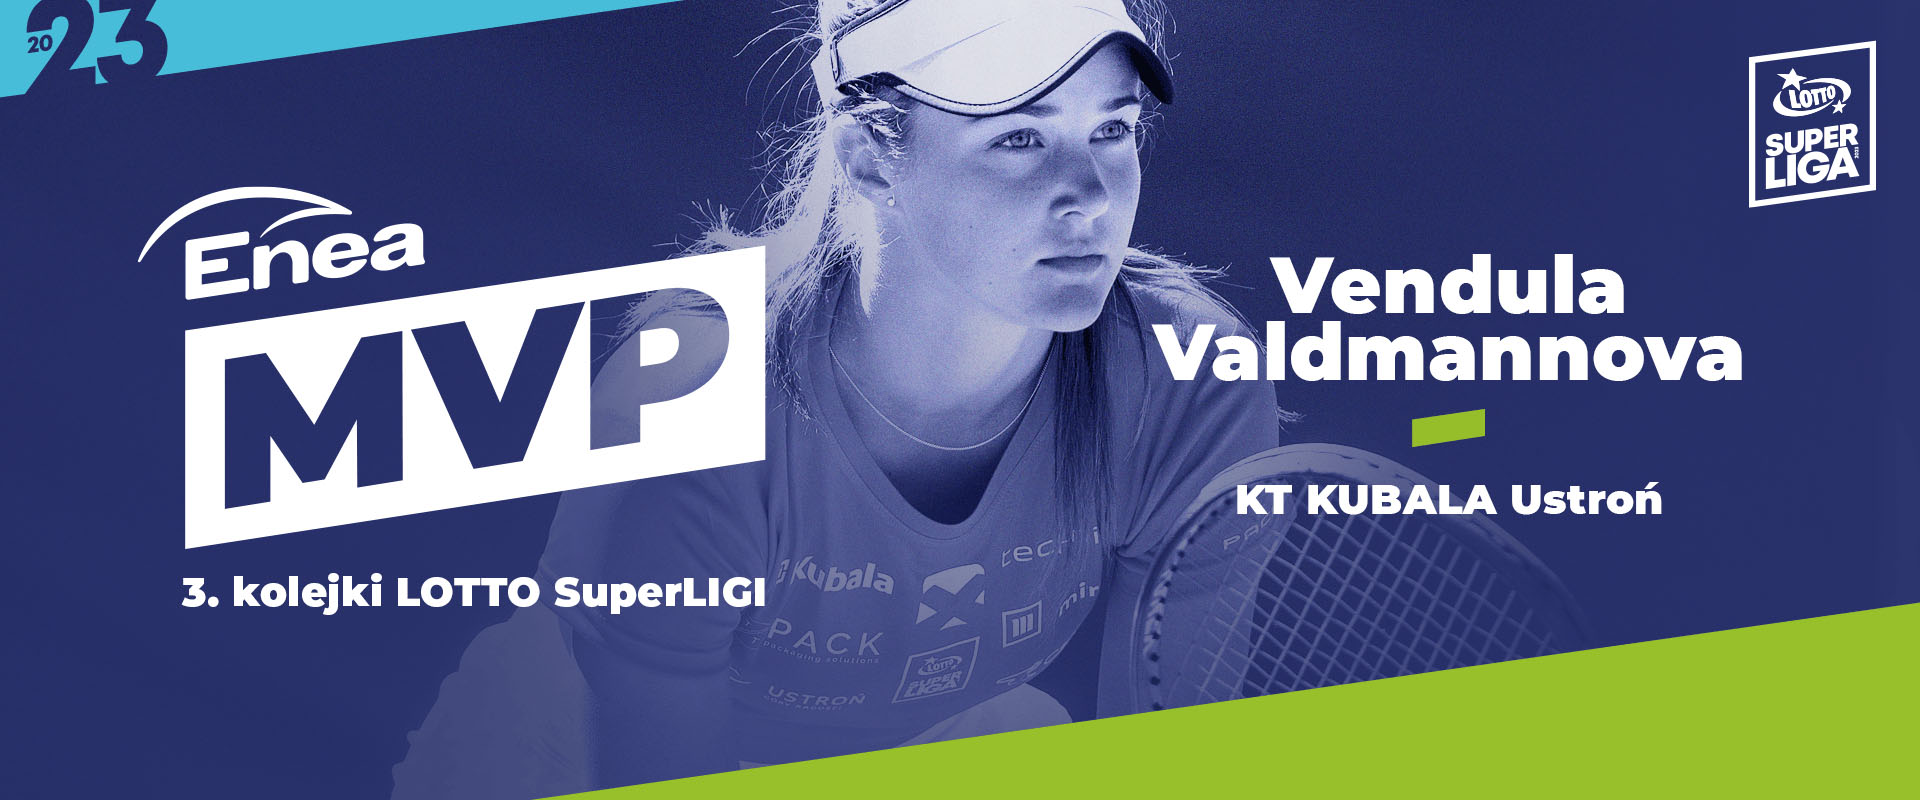 Vendula Valdmannova - Enea MVP of the 3rd round